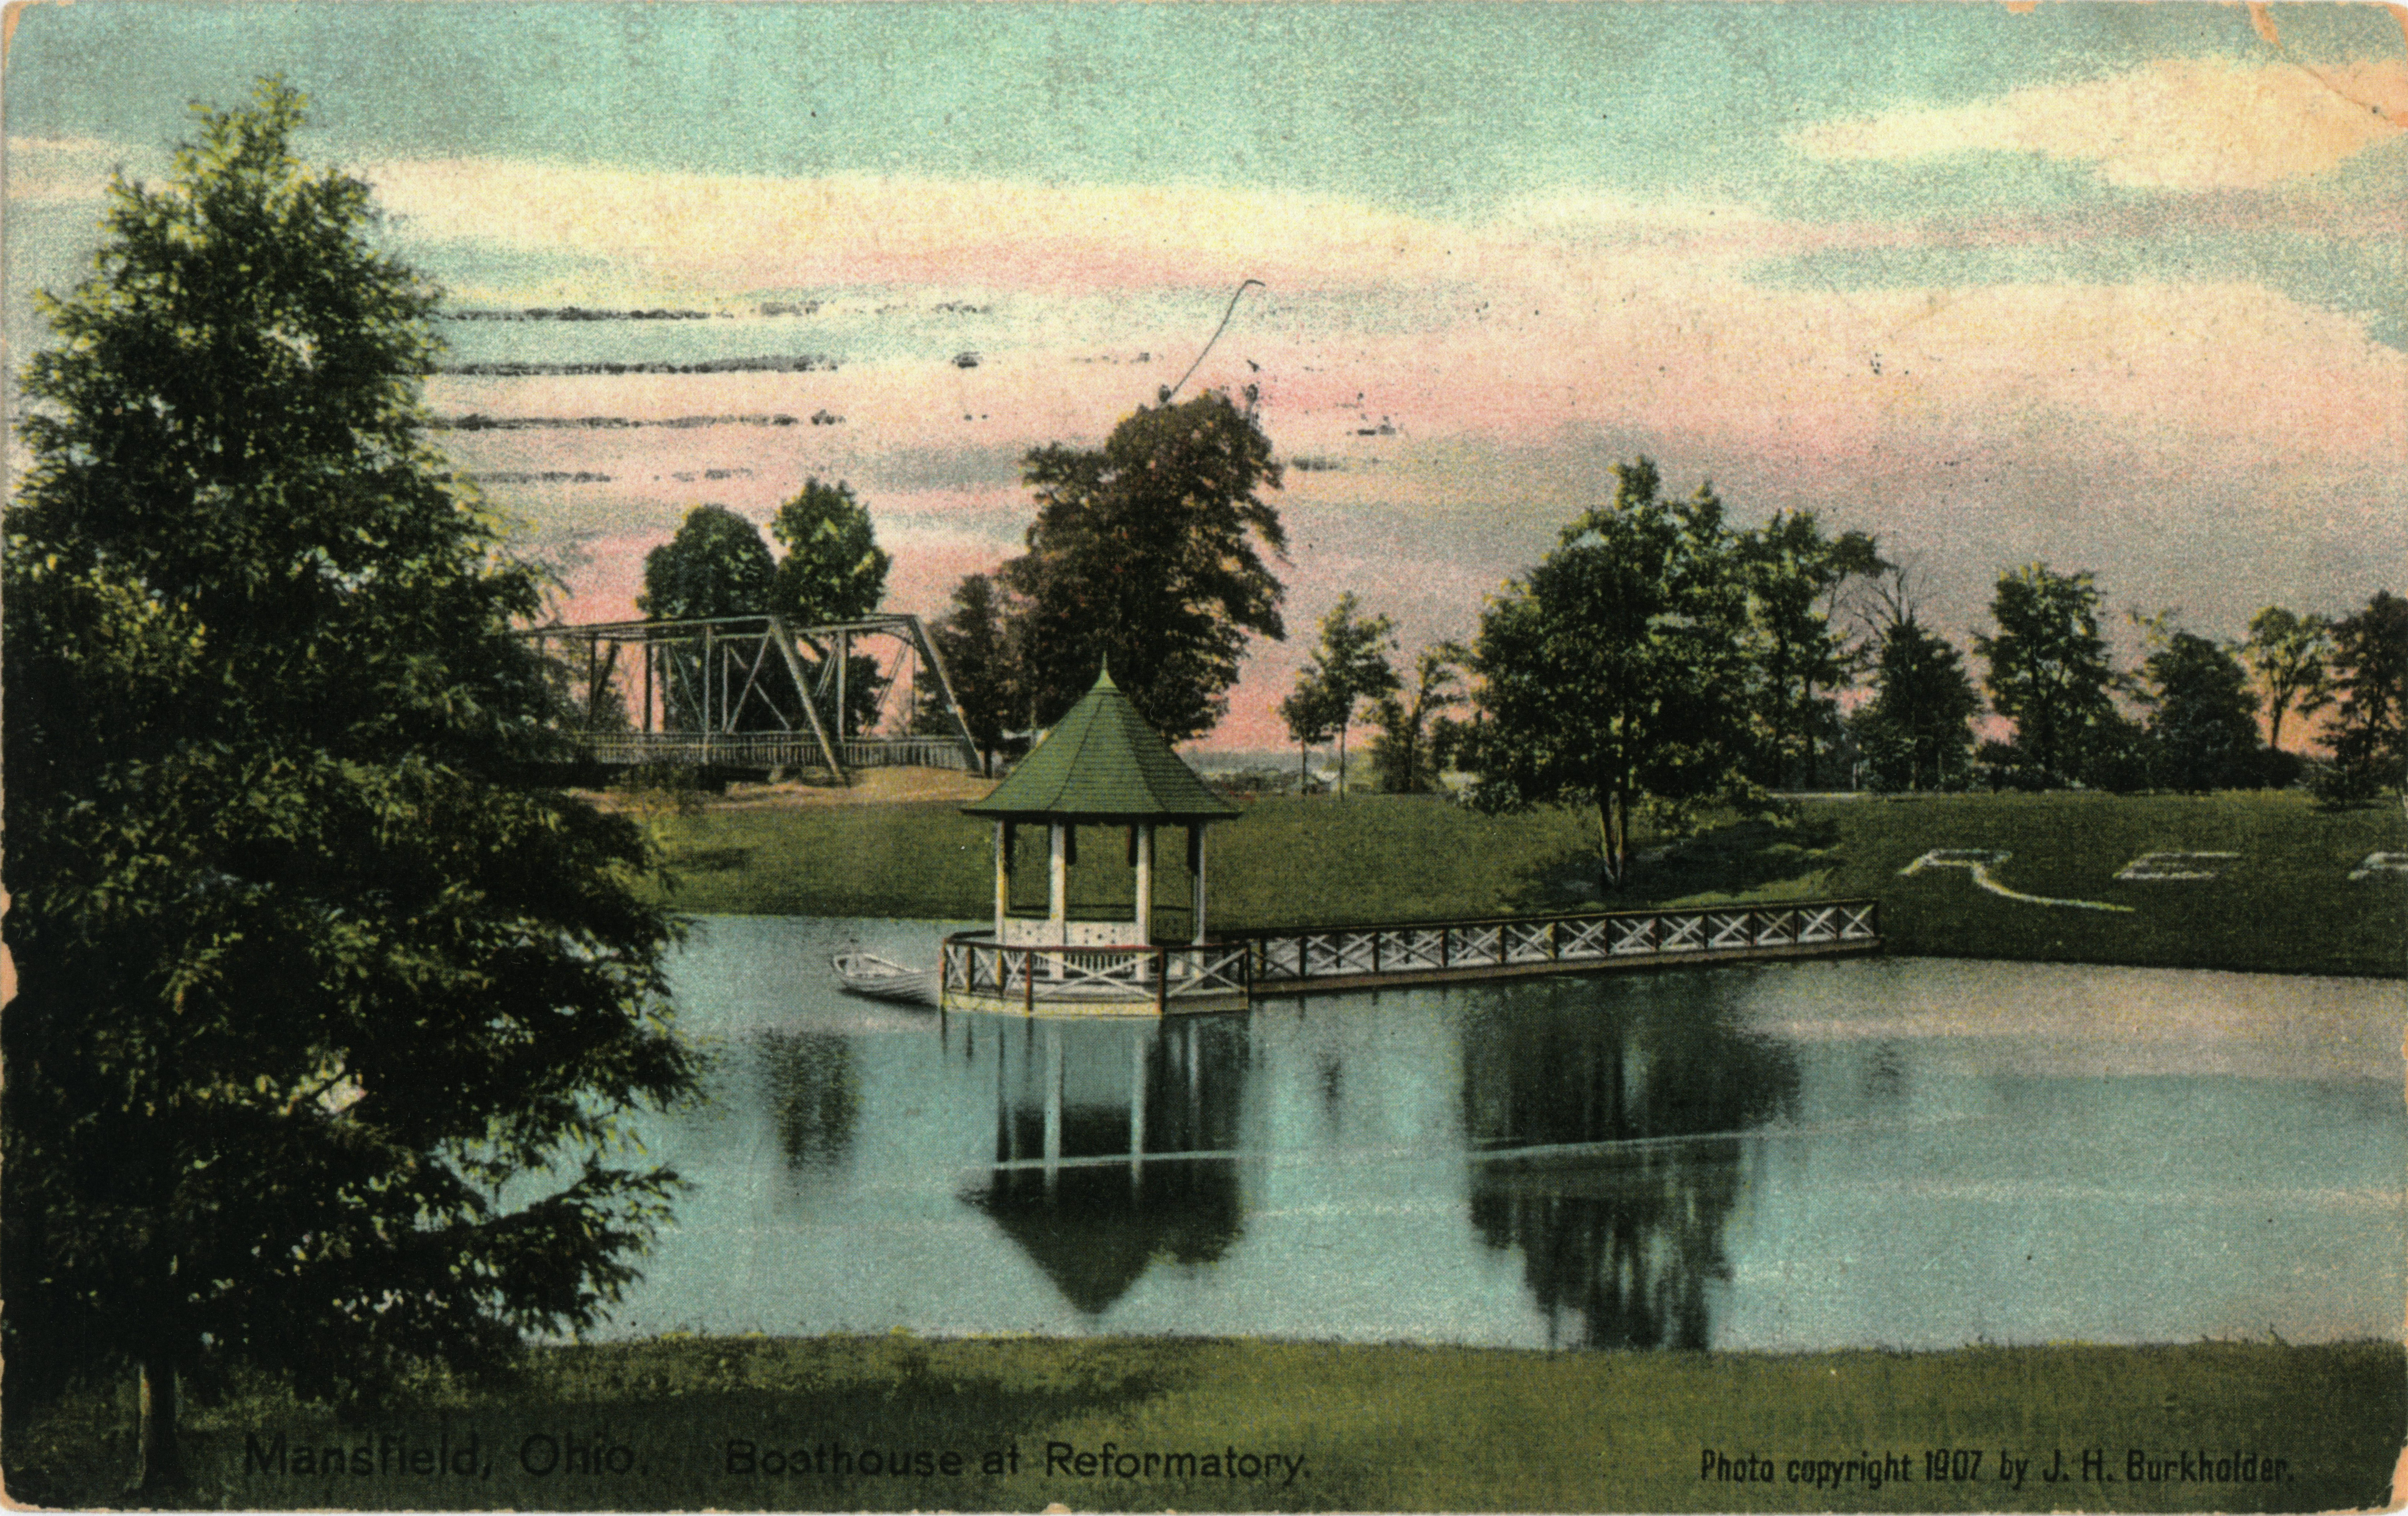 Mansfield, Ohio Boathouse at Reformatory Photo Copyright 1908 by J. H. Burkholder